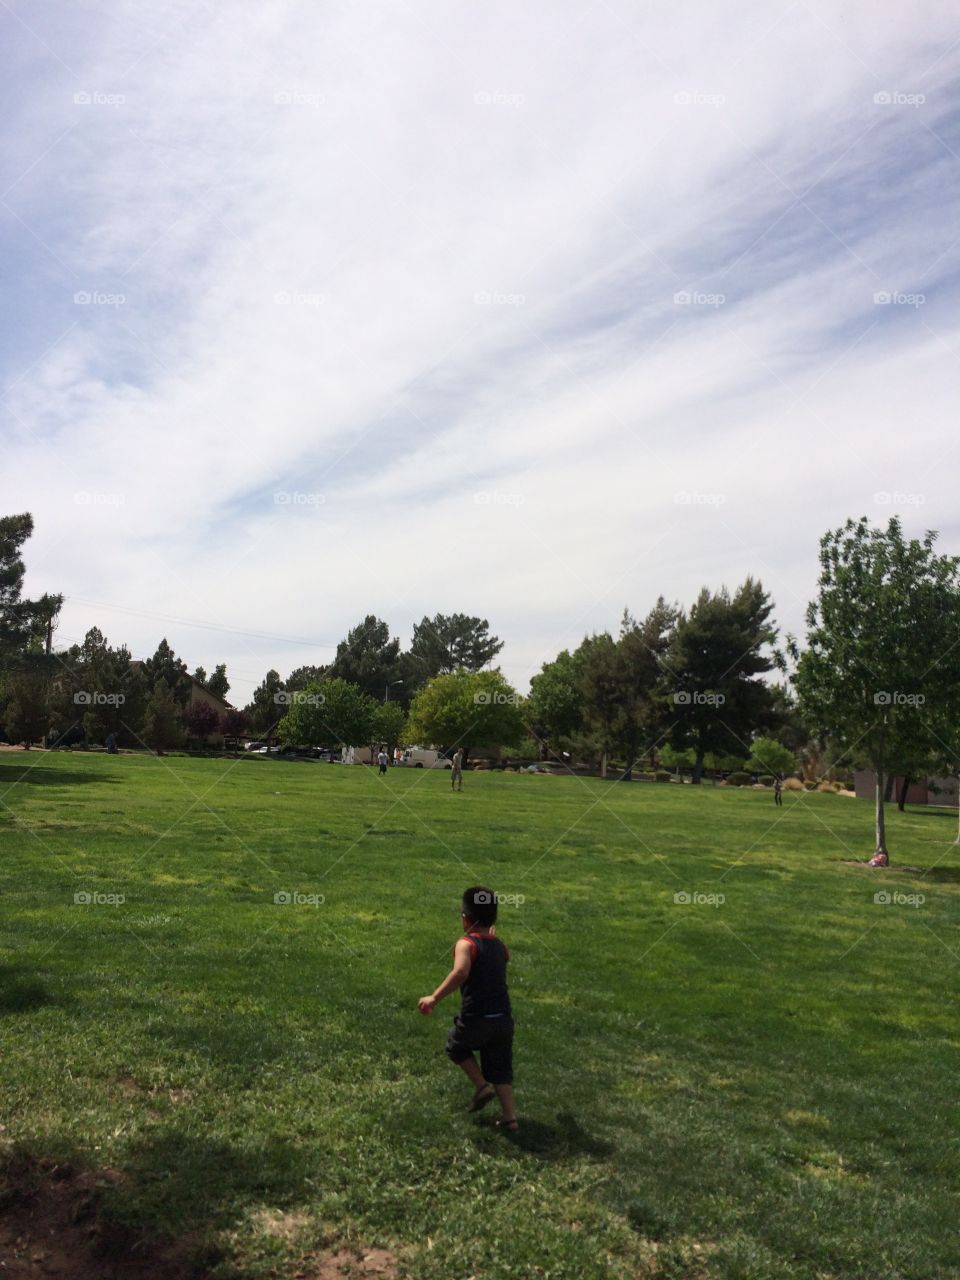 Park. Toddler in the park running 